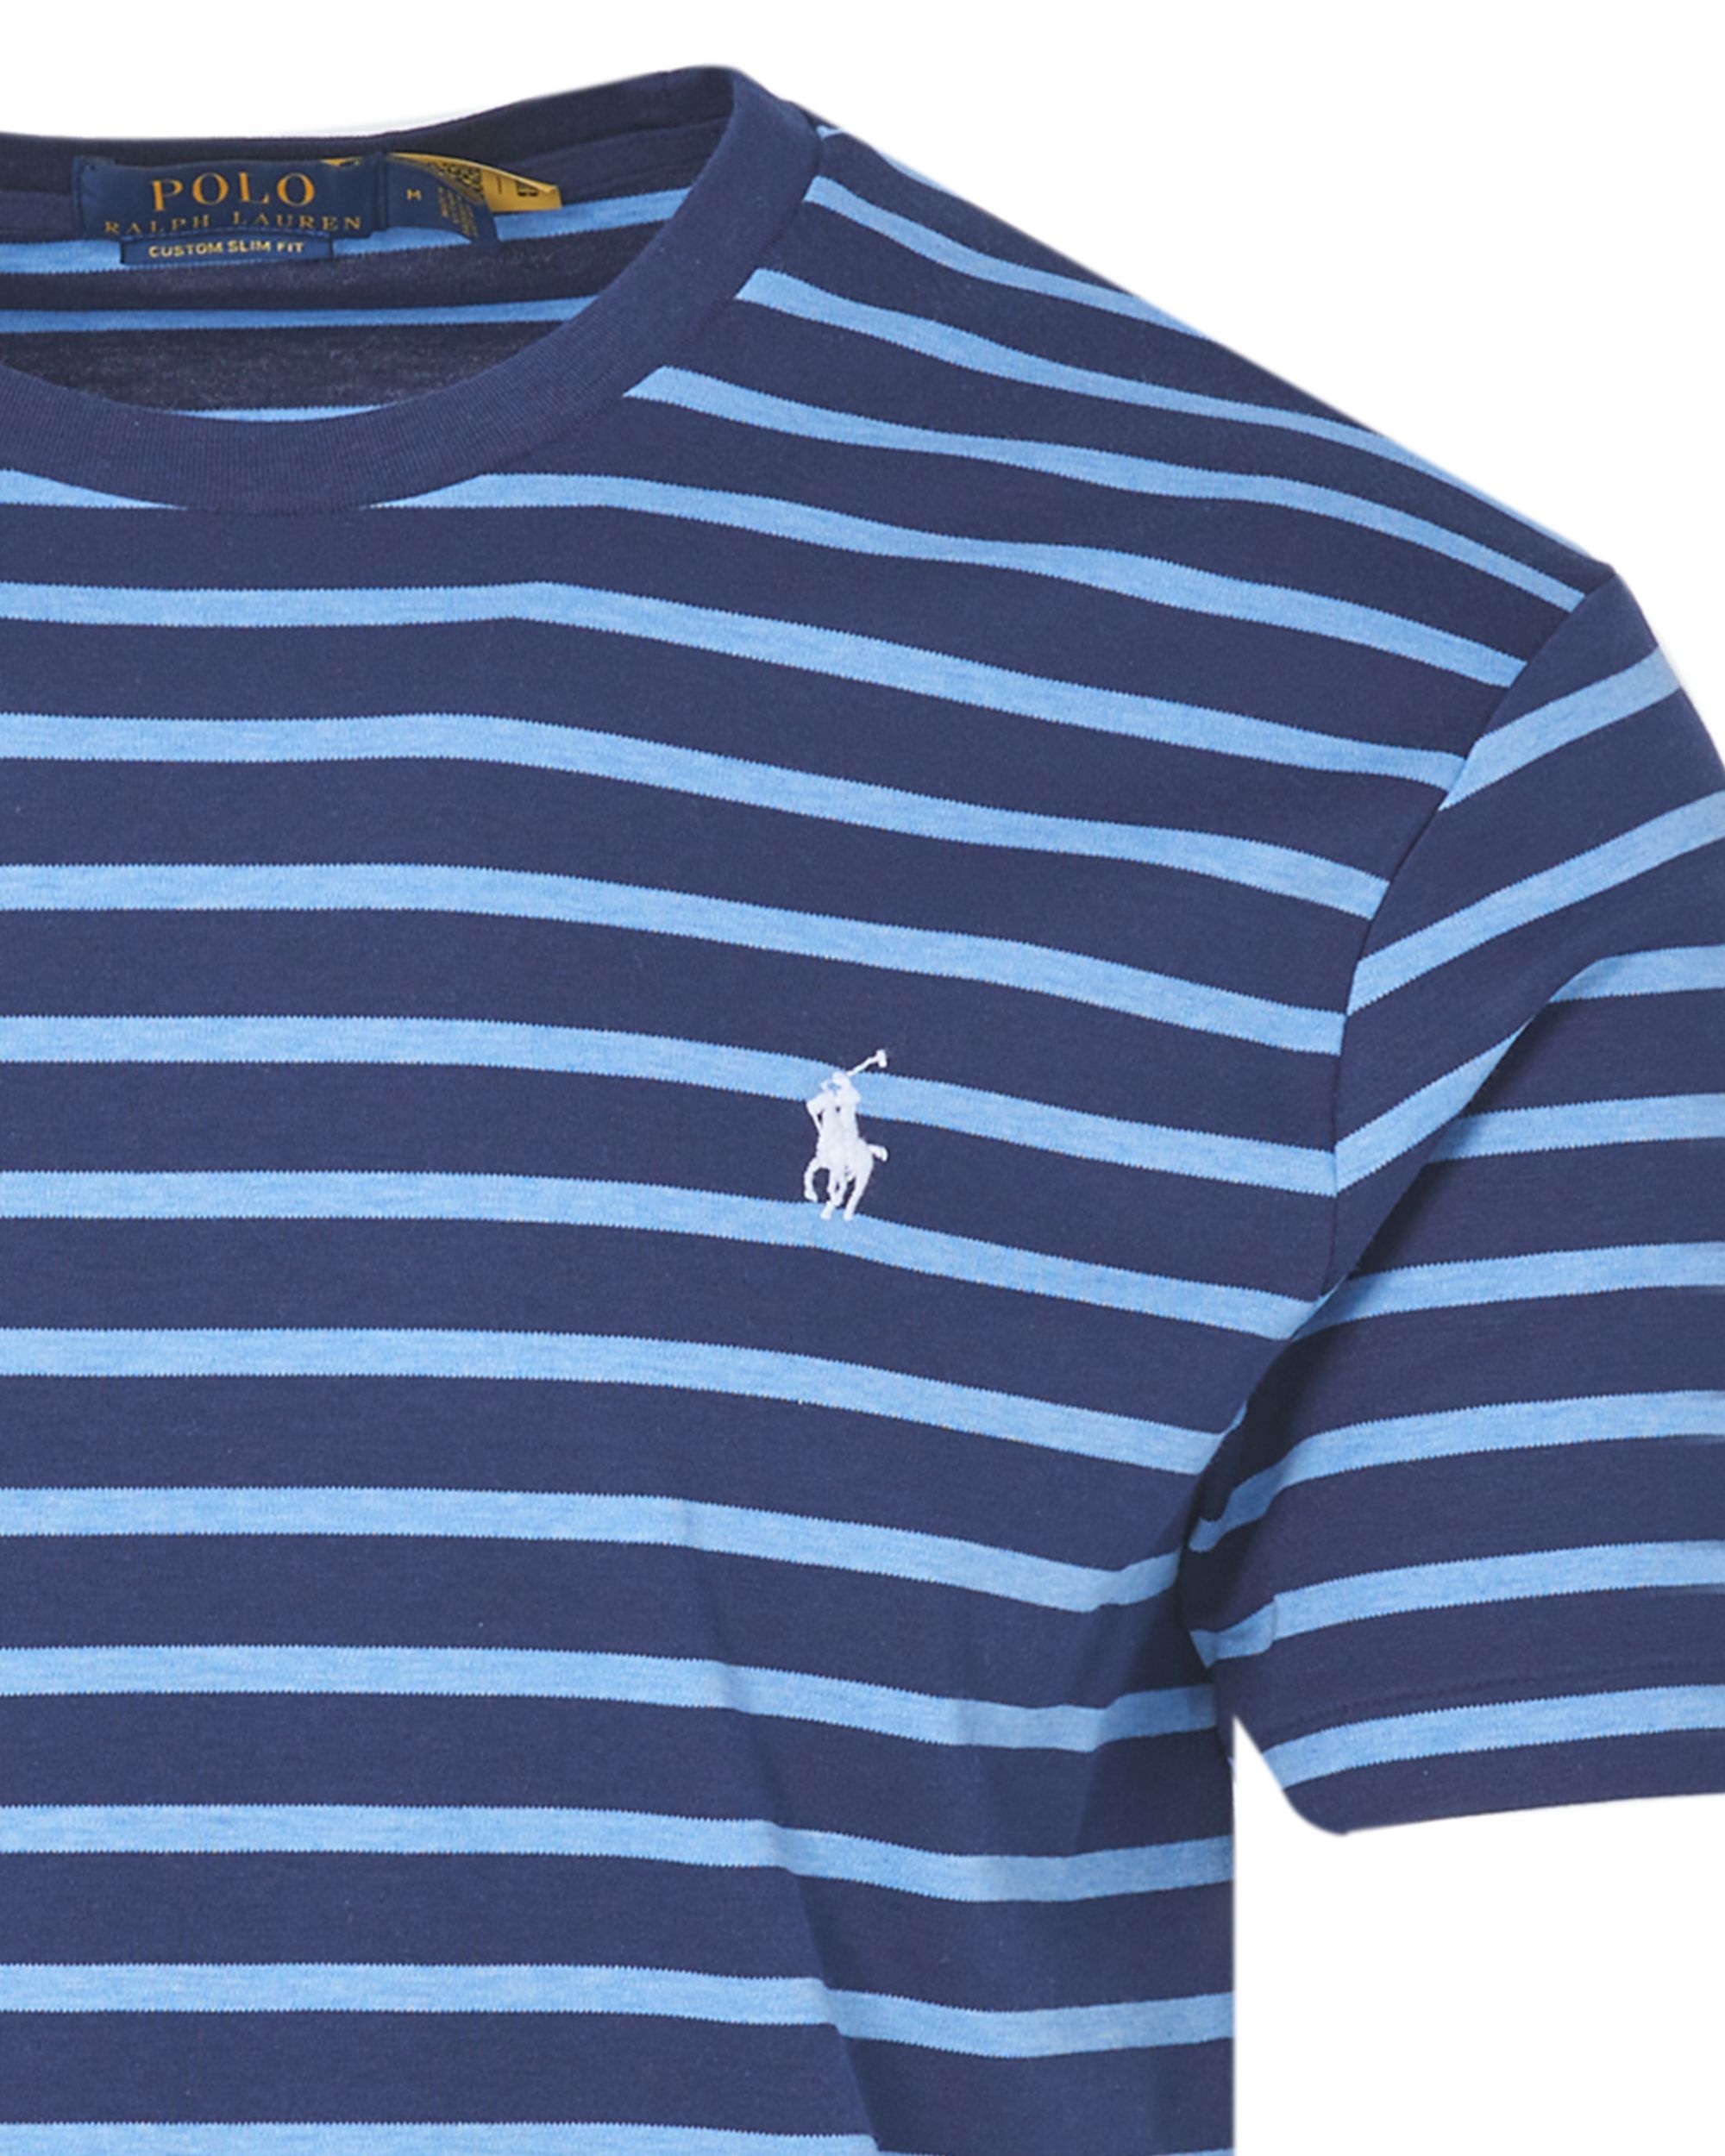 Polo Ralph Lauren T-shirt KM Blauw streep 083489-001-L